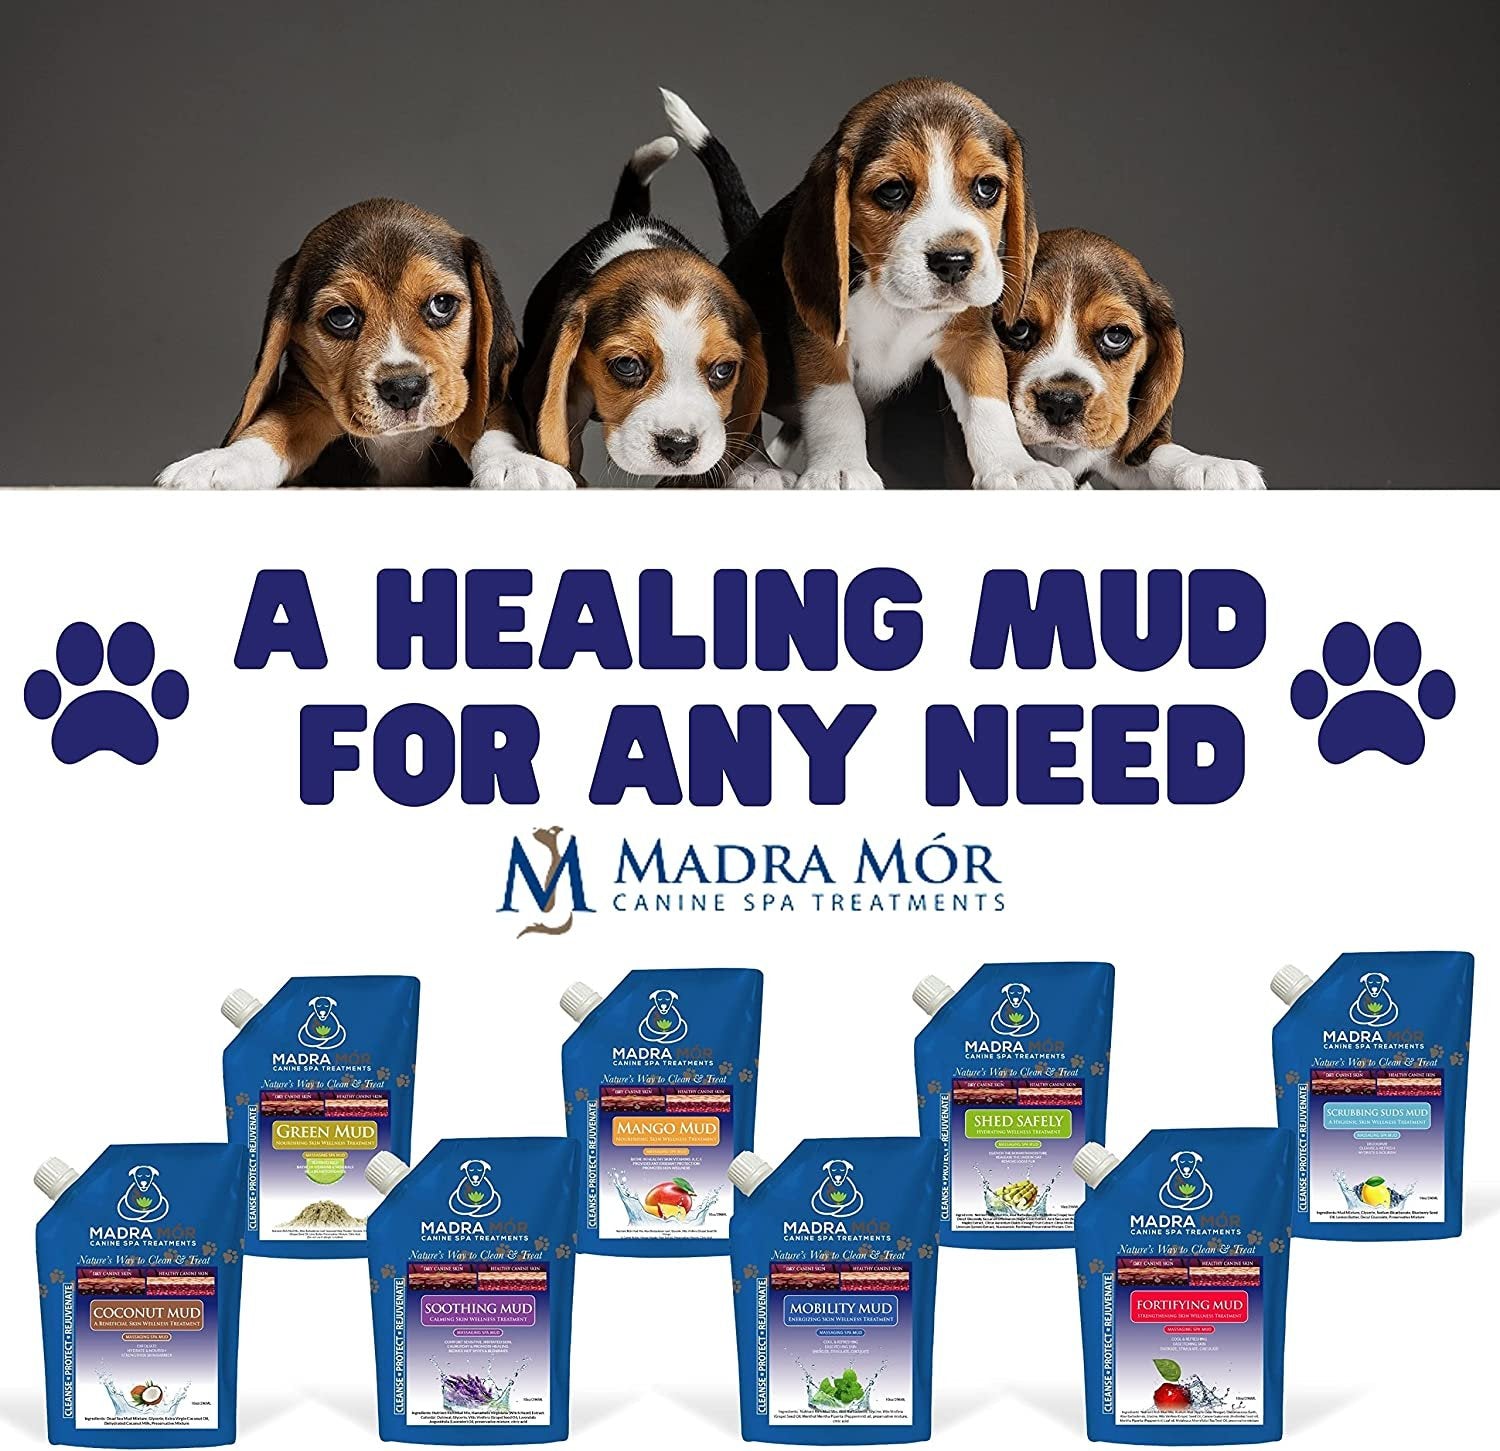 Madra Mor Mobility Dog Essentials Mud Bath | Dog Bath Spa Treatment for Dog Arthritis Pain Relief | Anti Itch Dog Bath for Dog Coat | Dogs Wash for Dog Grooming | 10oz Pouch w Multi Purpose Key Chain